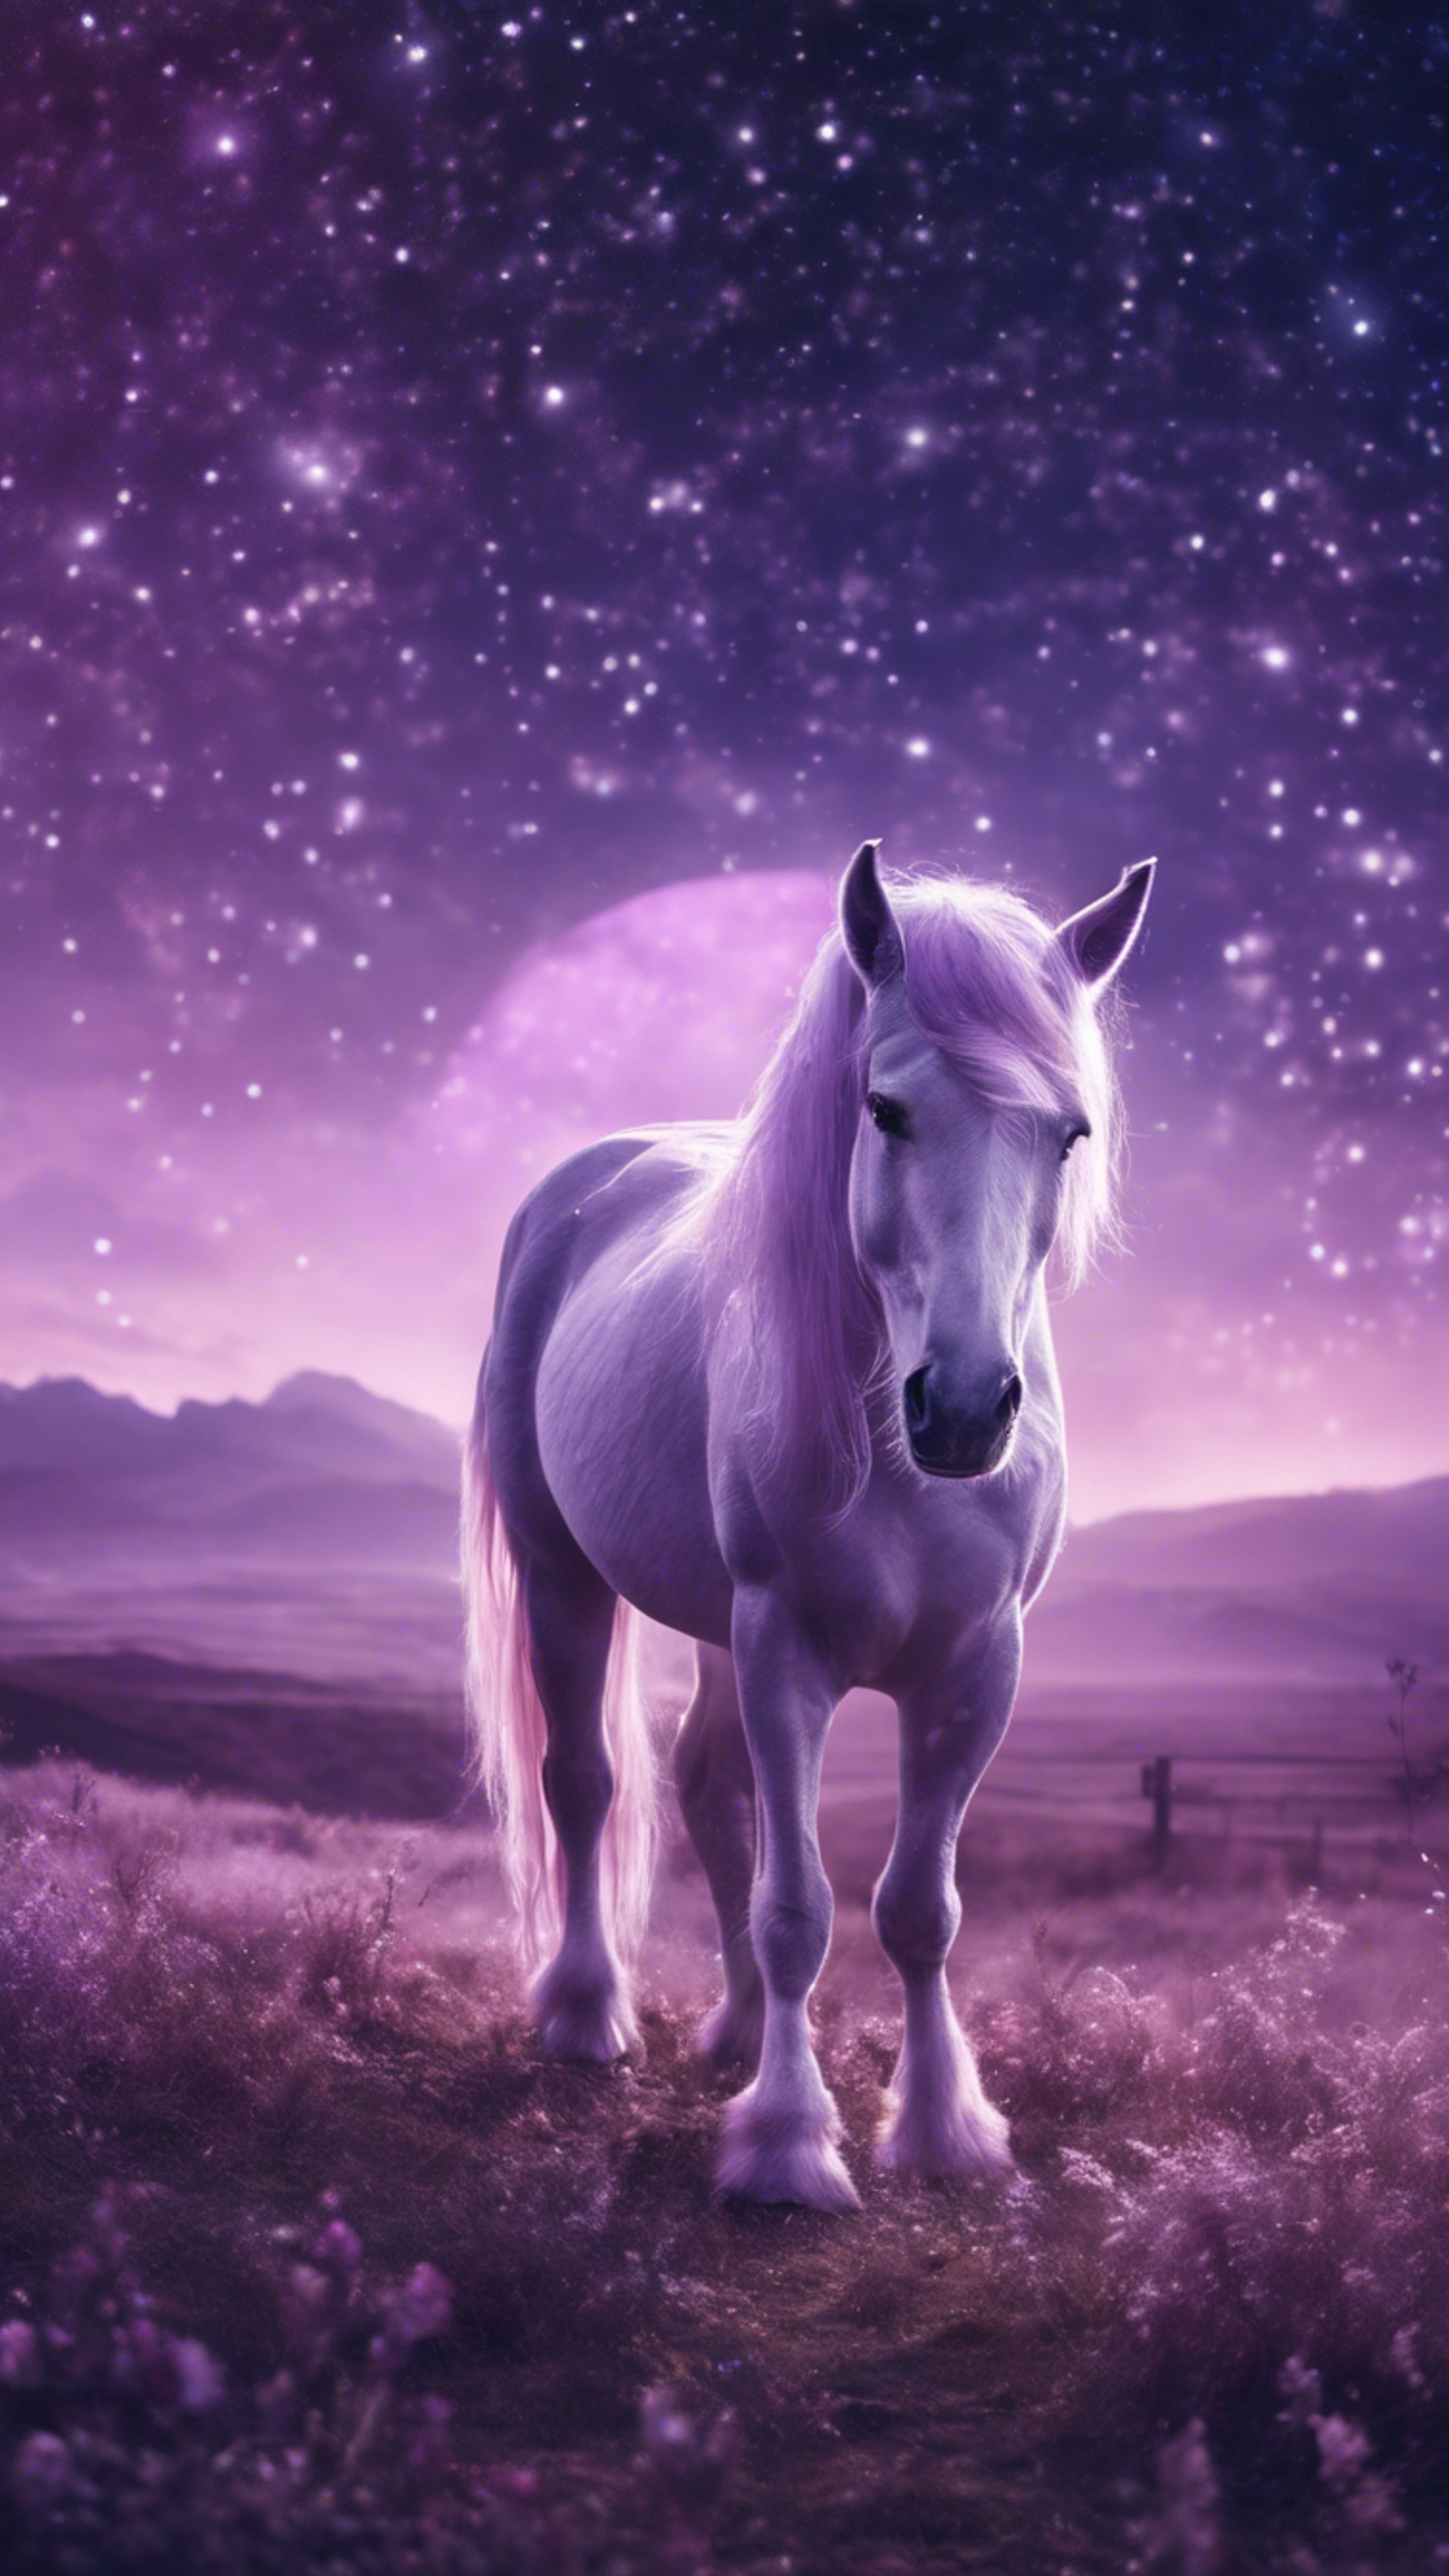 A light purple unicorn grazing in a mystical landscape under the starry night. Tapet[ebdebf087ad14a189ba8]